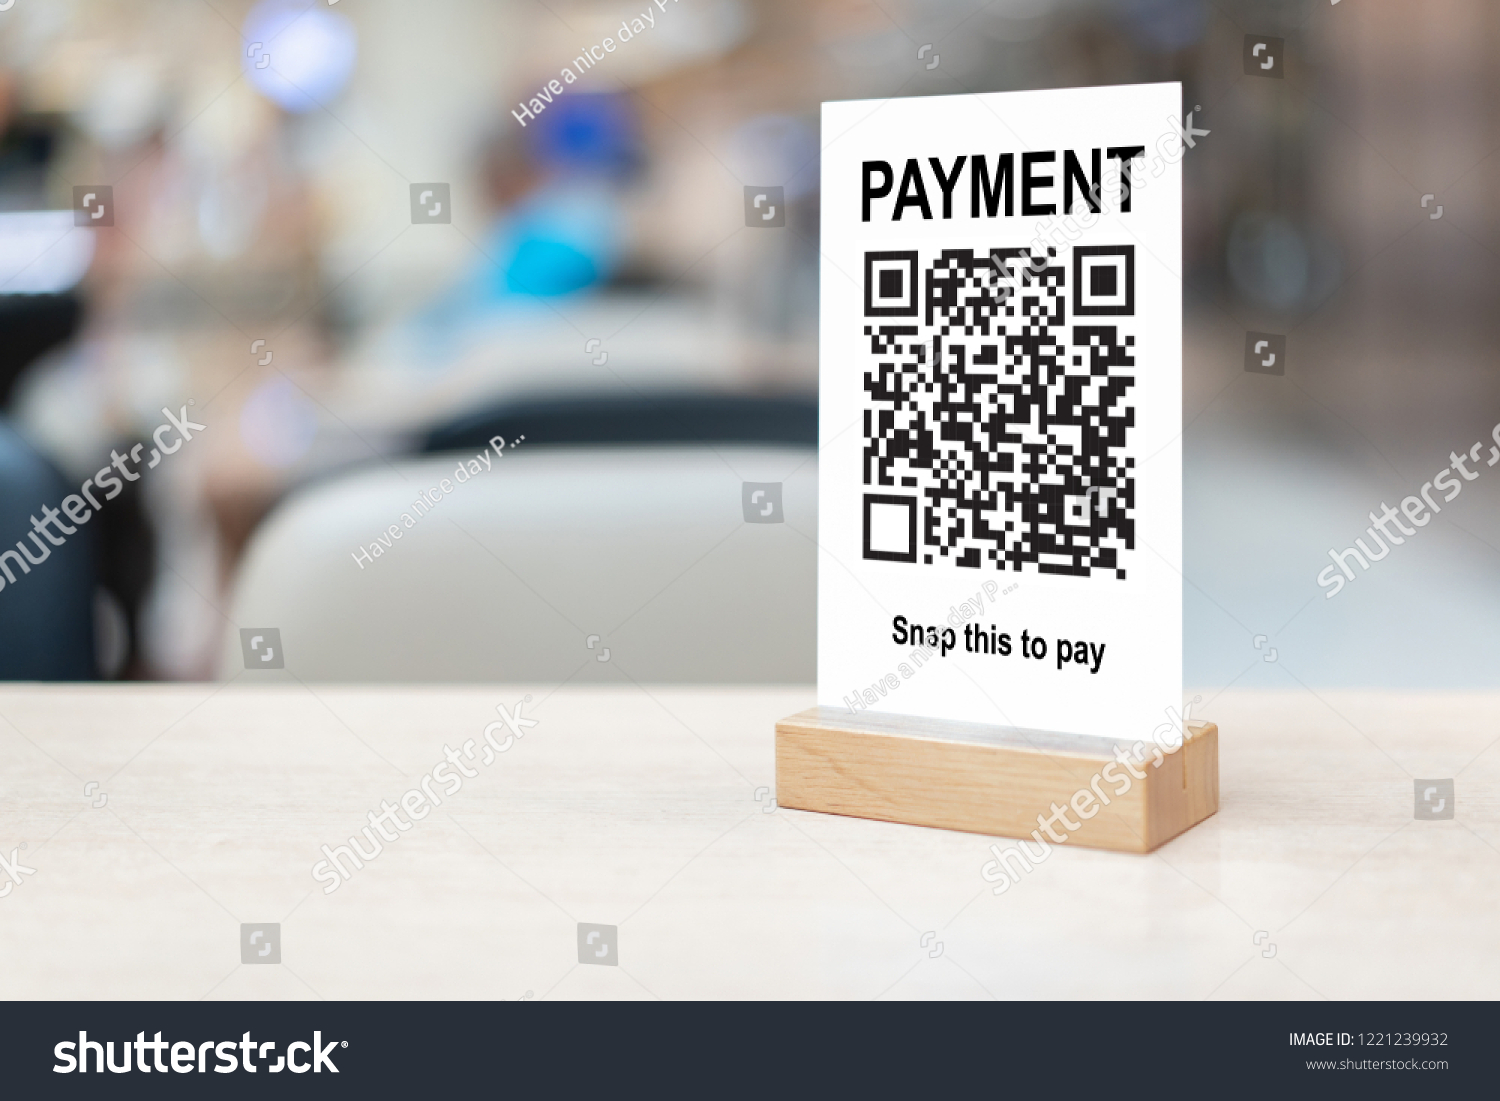 Download Payment Qr Code Moblie Wallet Phone Stock Photo Edit Now 1221239932